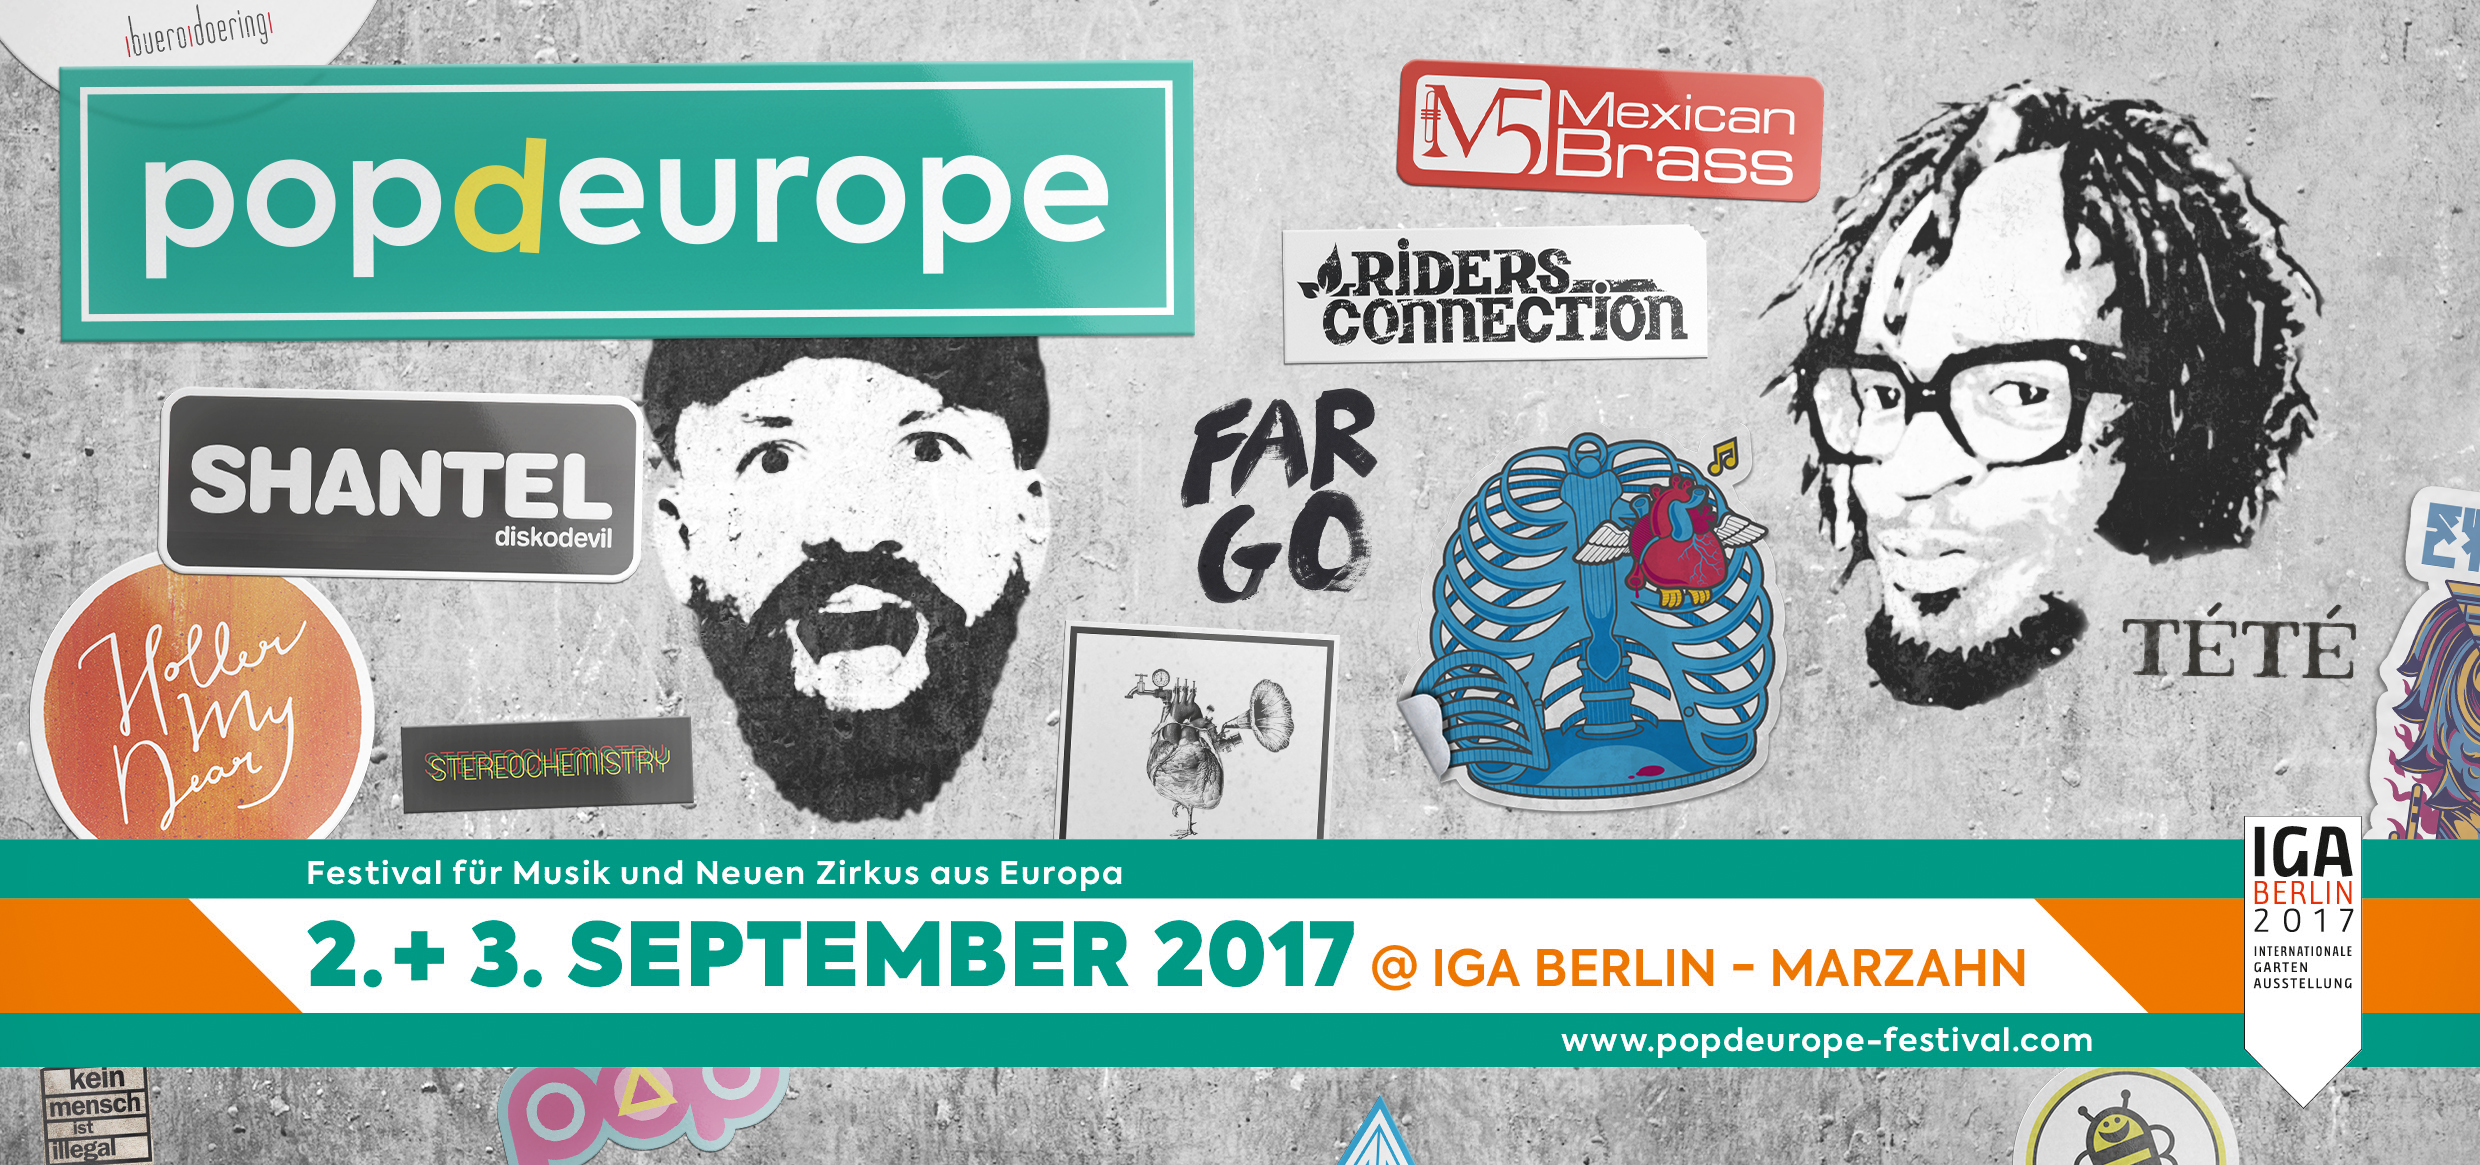 popdeurope, Festival, Shantel, Riders Connection, Adam Wendler, Beranger, IGA Berlin, Internationale Gartenausstellung